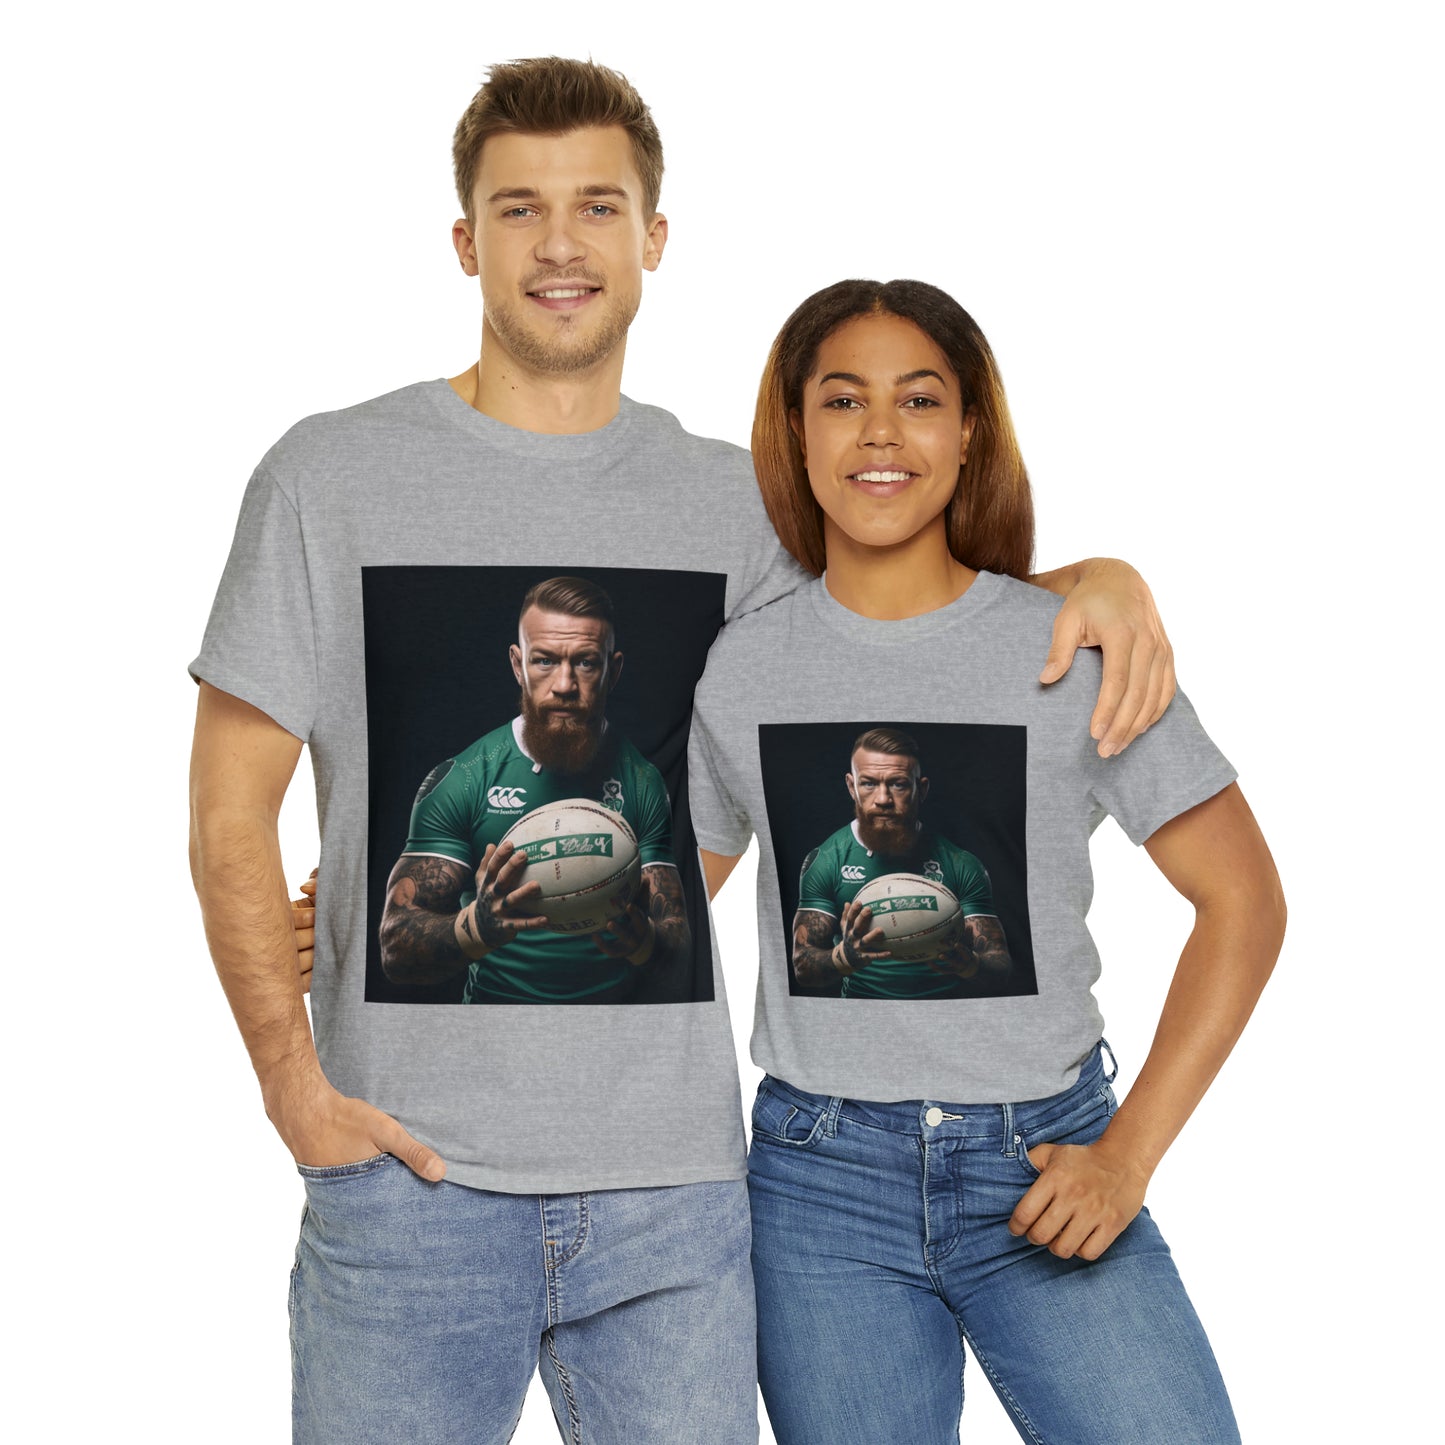 Serious Conor - light shirts